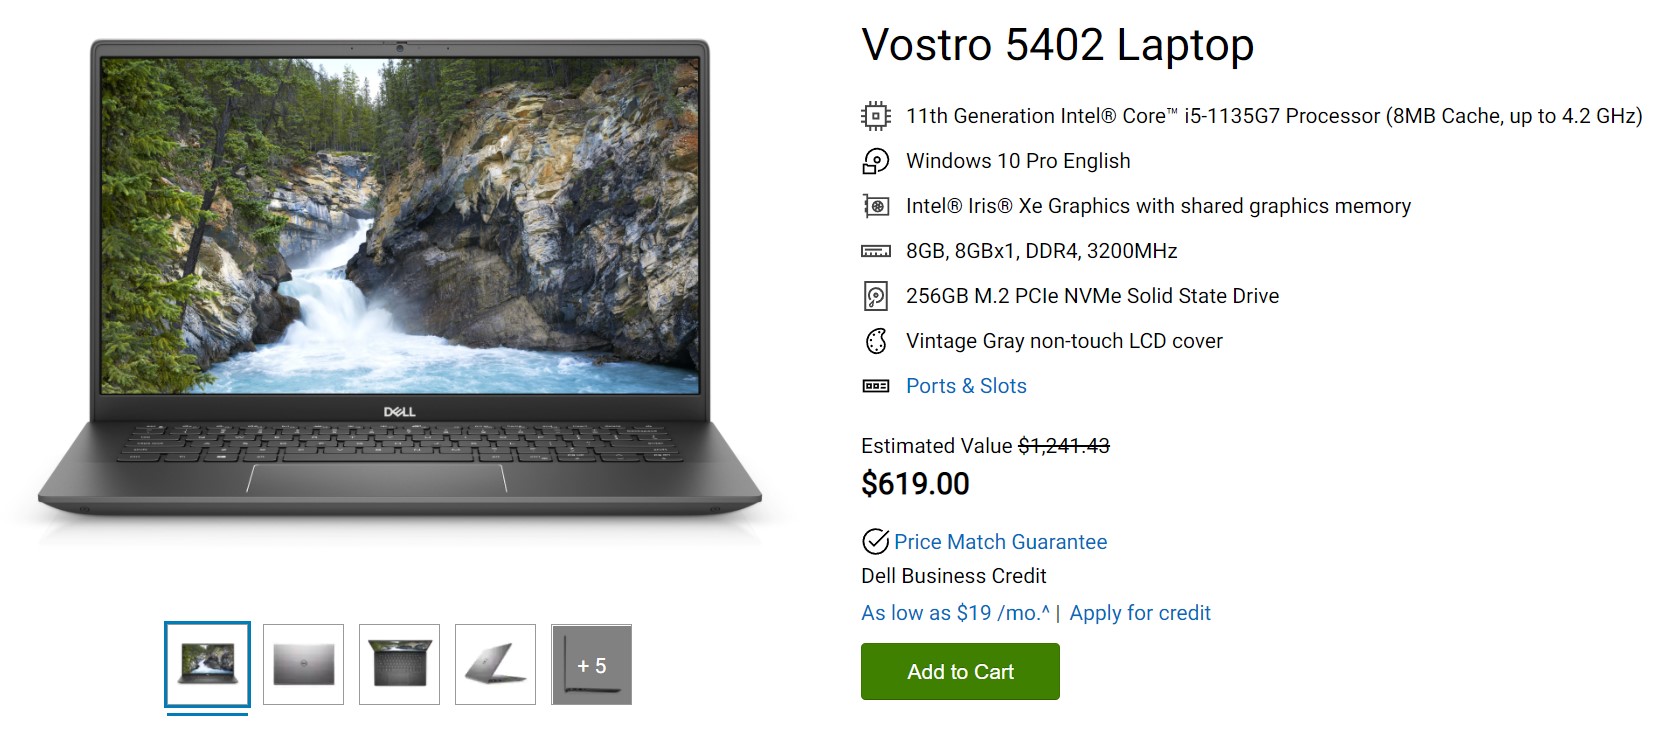 Dell Vostro 5402 Laptop Deal